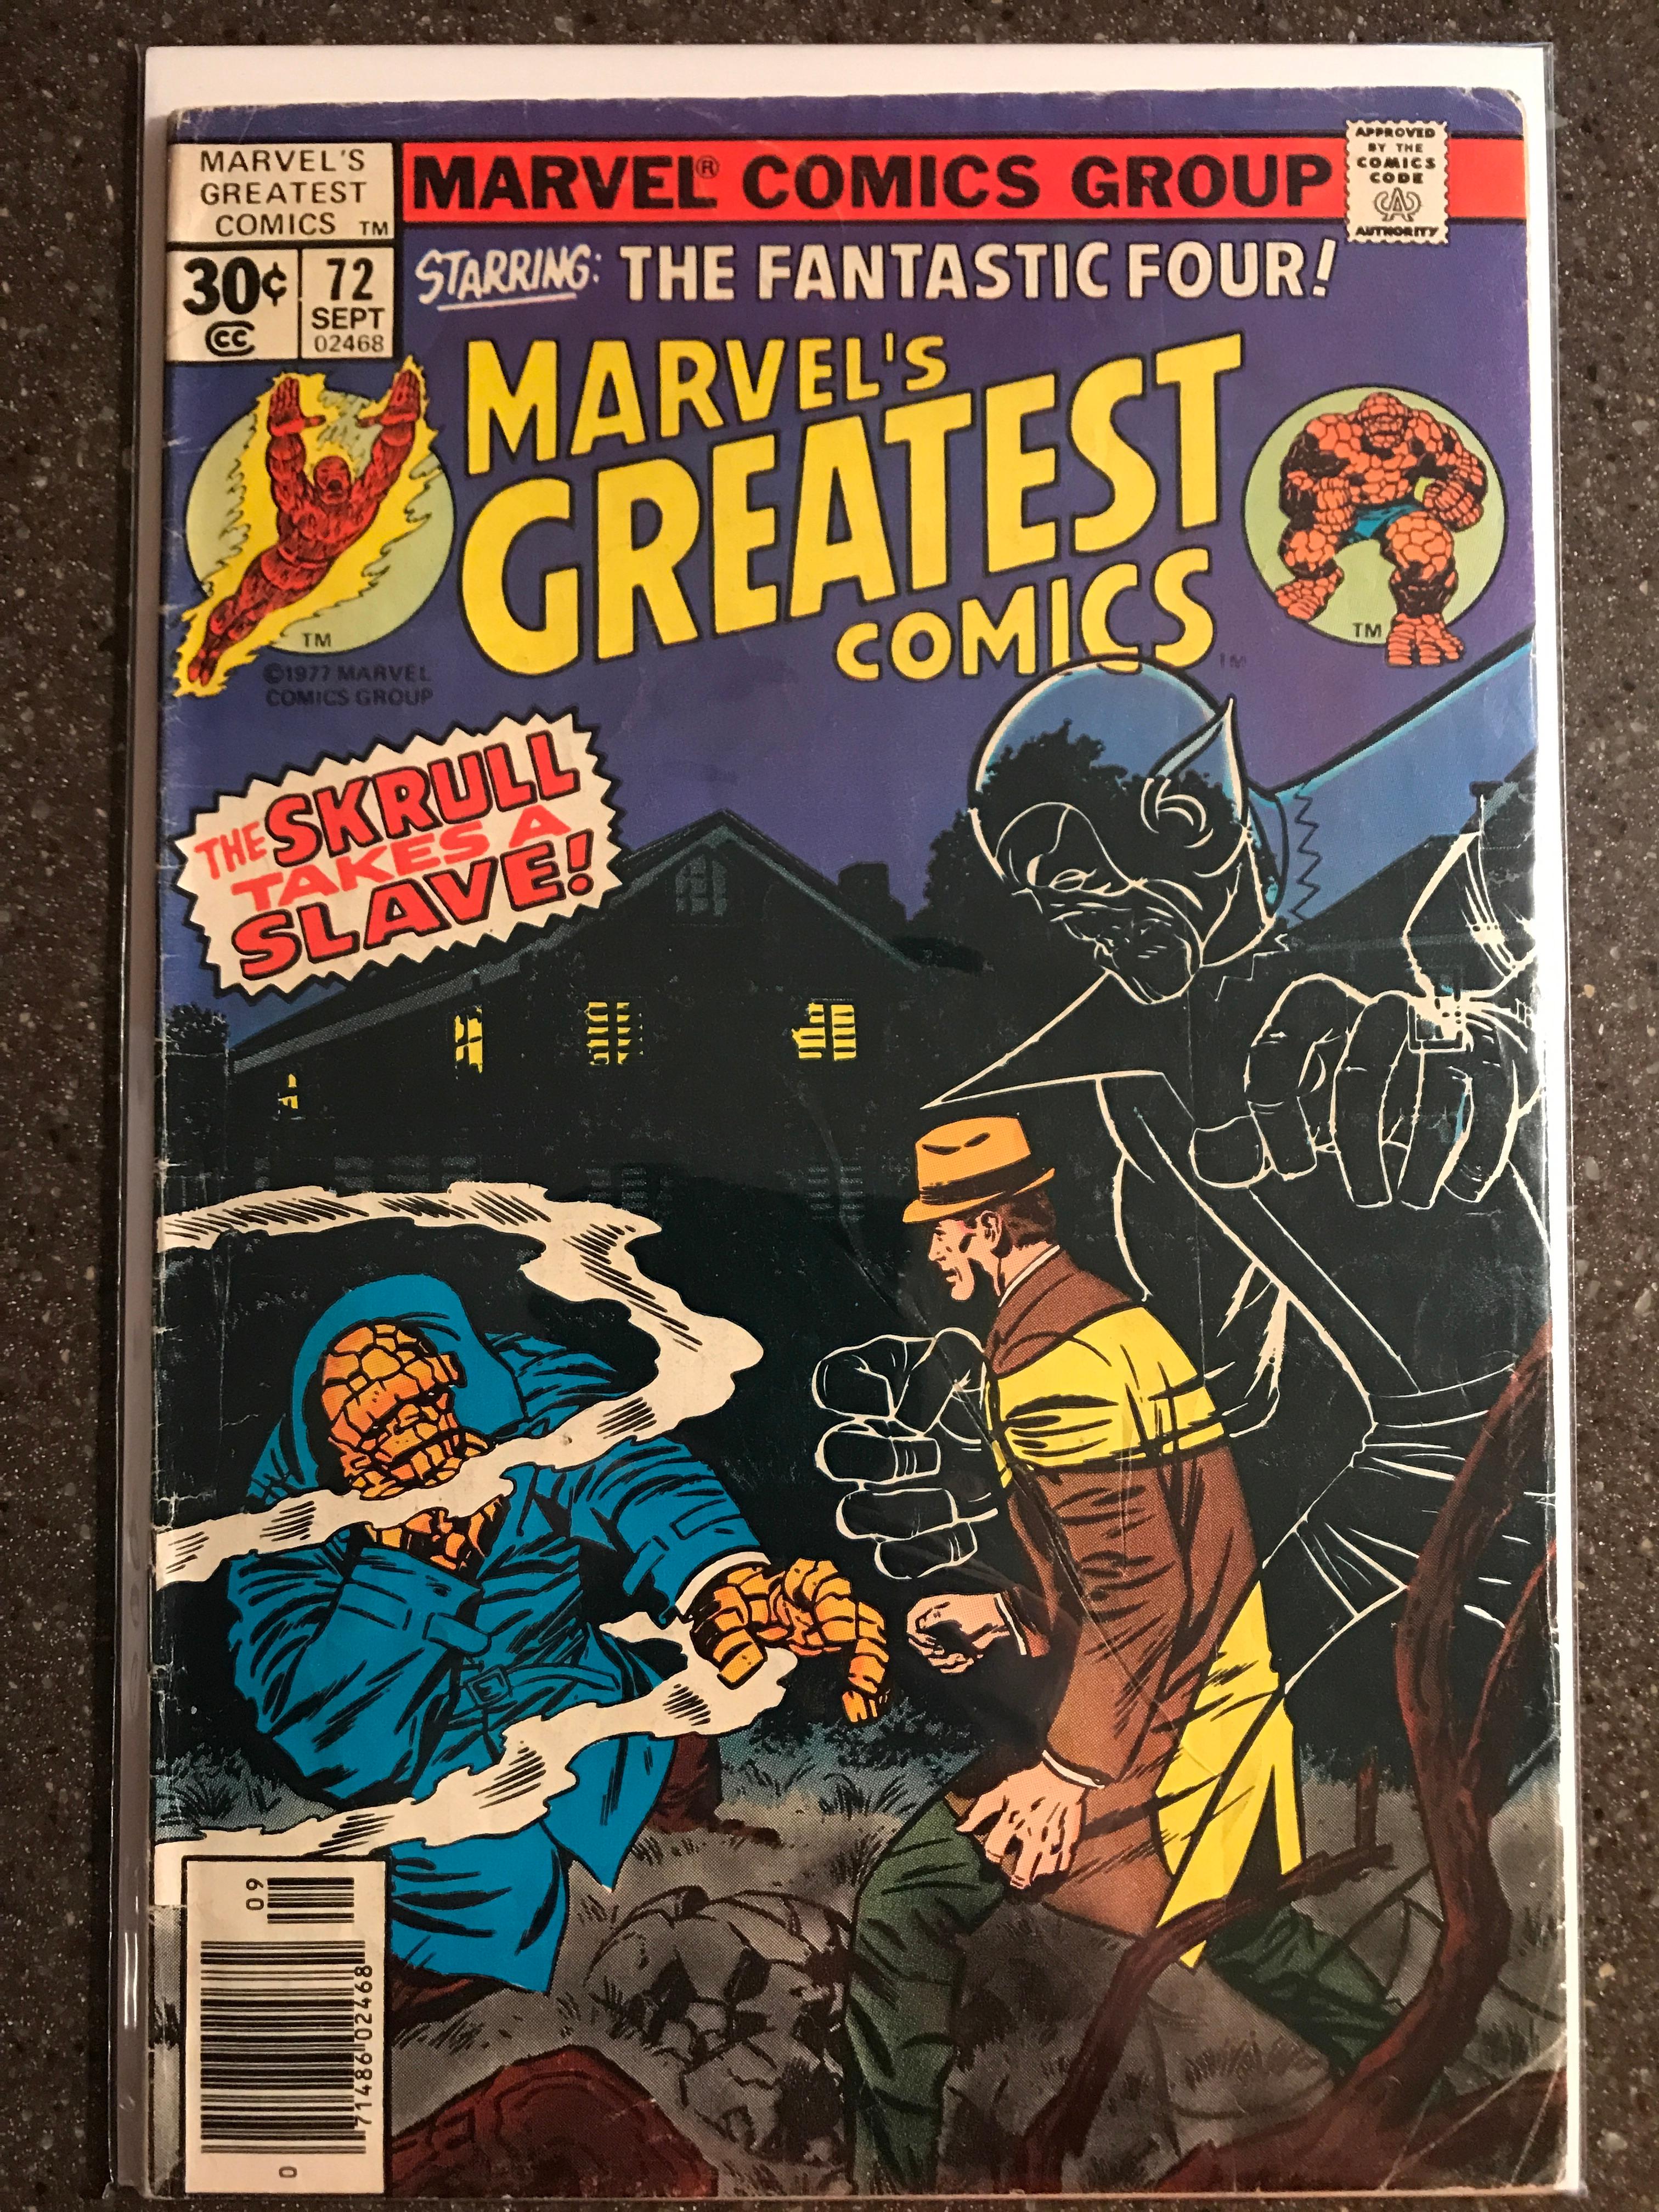 Marvels Greatest Comics Starring the Fantastic Four #72 Comic Marvel Comics 1977 Bronze Age